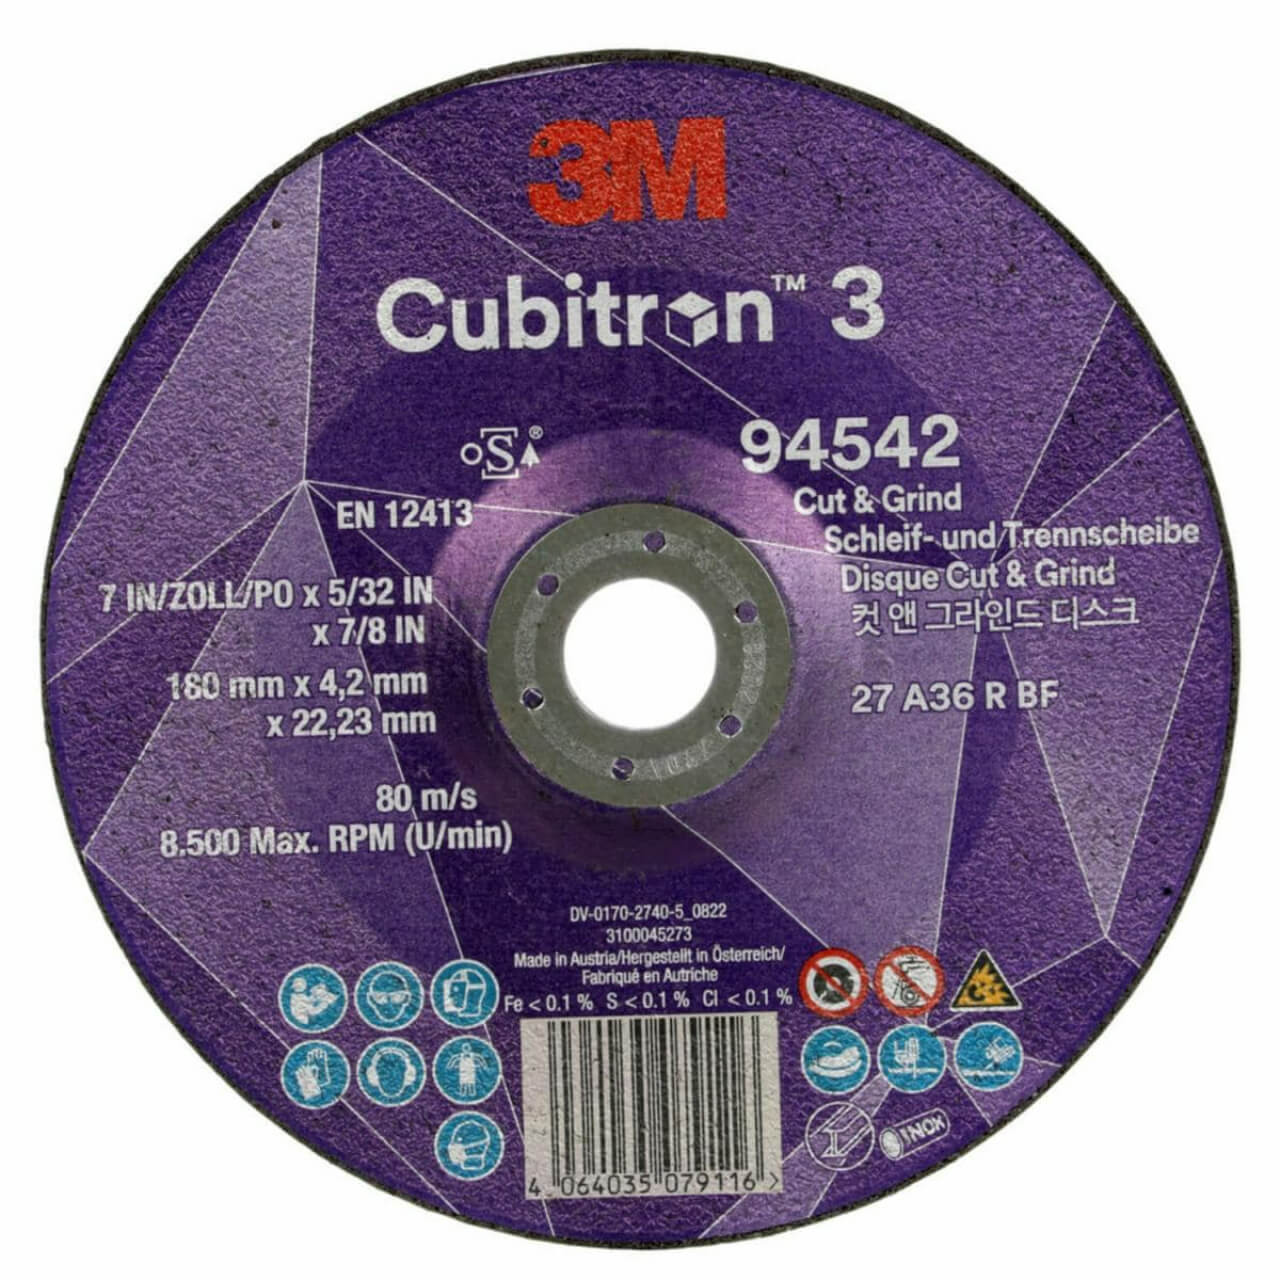 3M Cubitron 3 180x4.2x22 36+ Cut & Grind Wheel 10/box